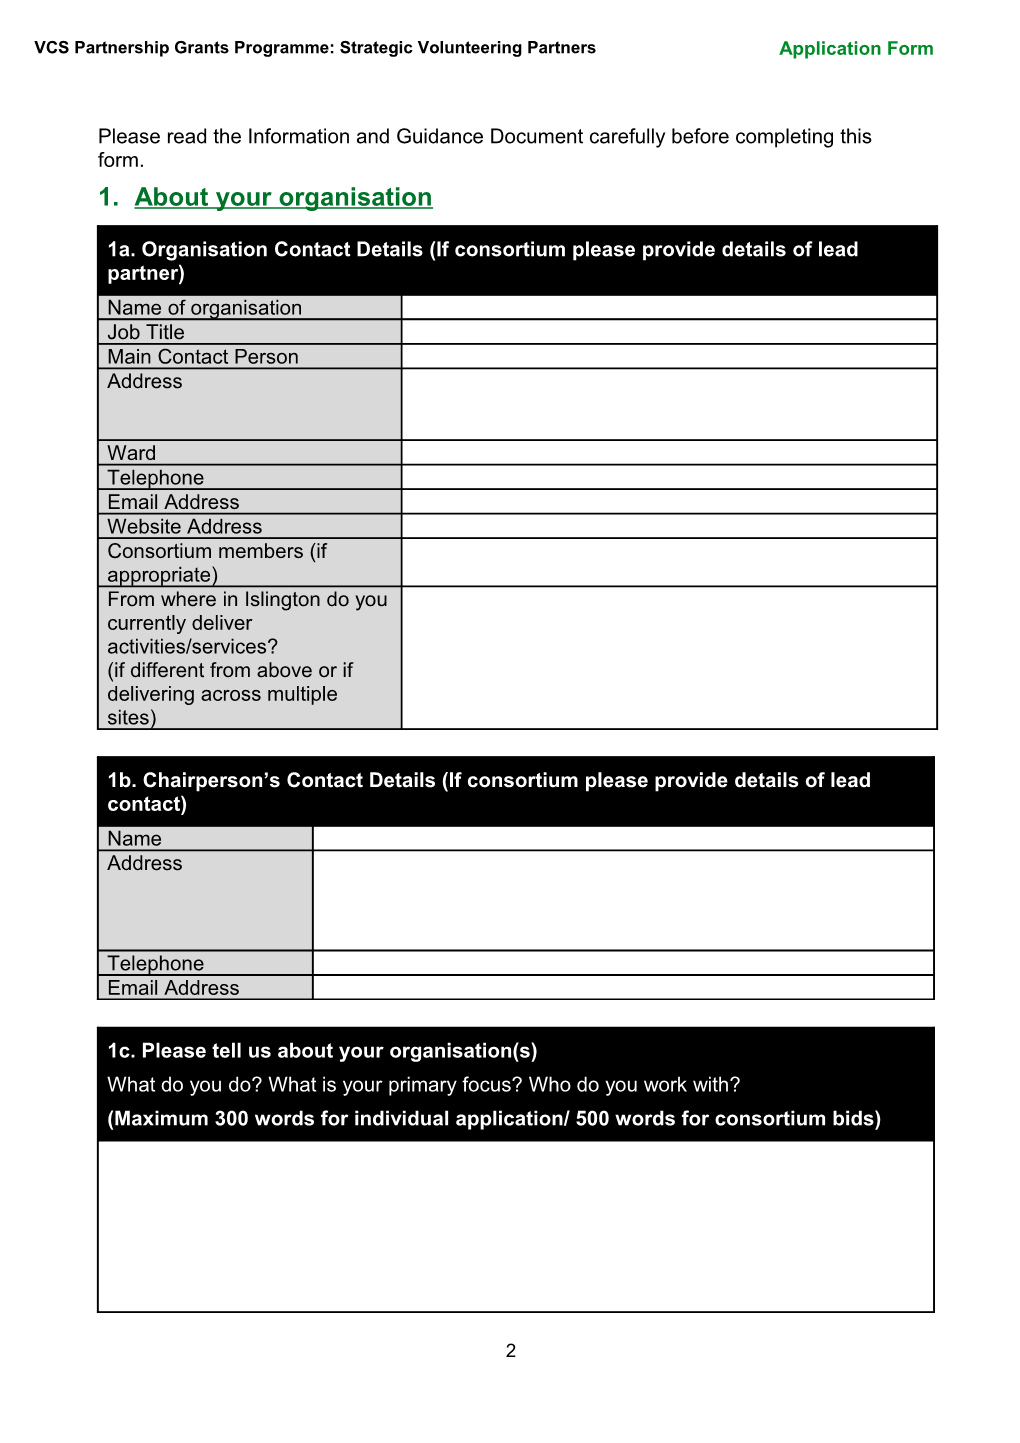 VCS Volunteering Brokerage Application Form (Windows 93-2003)